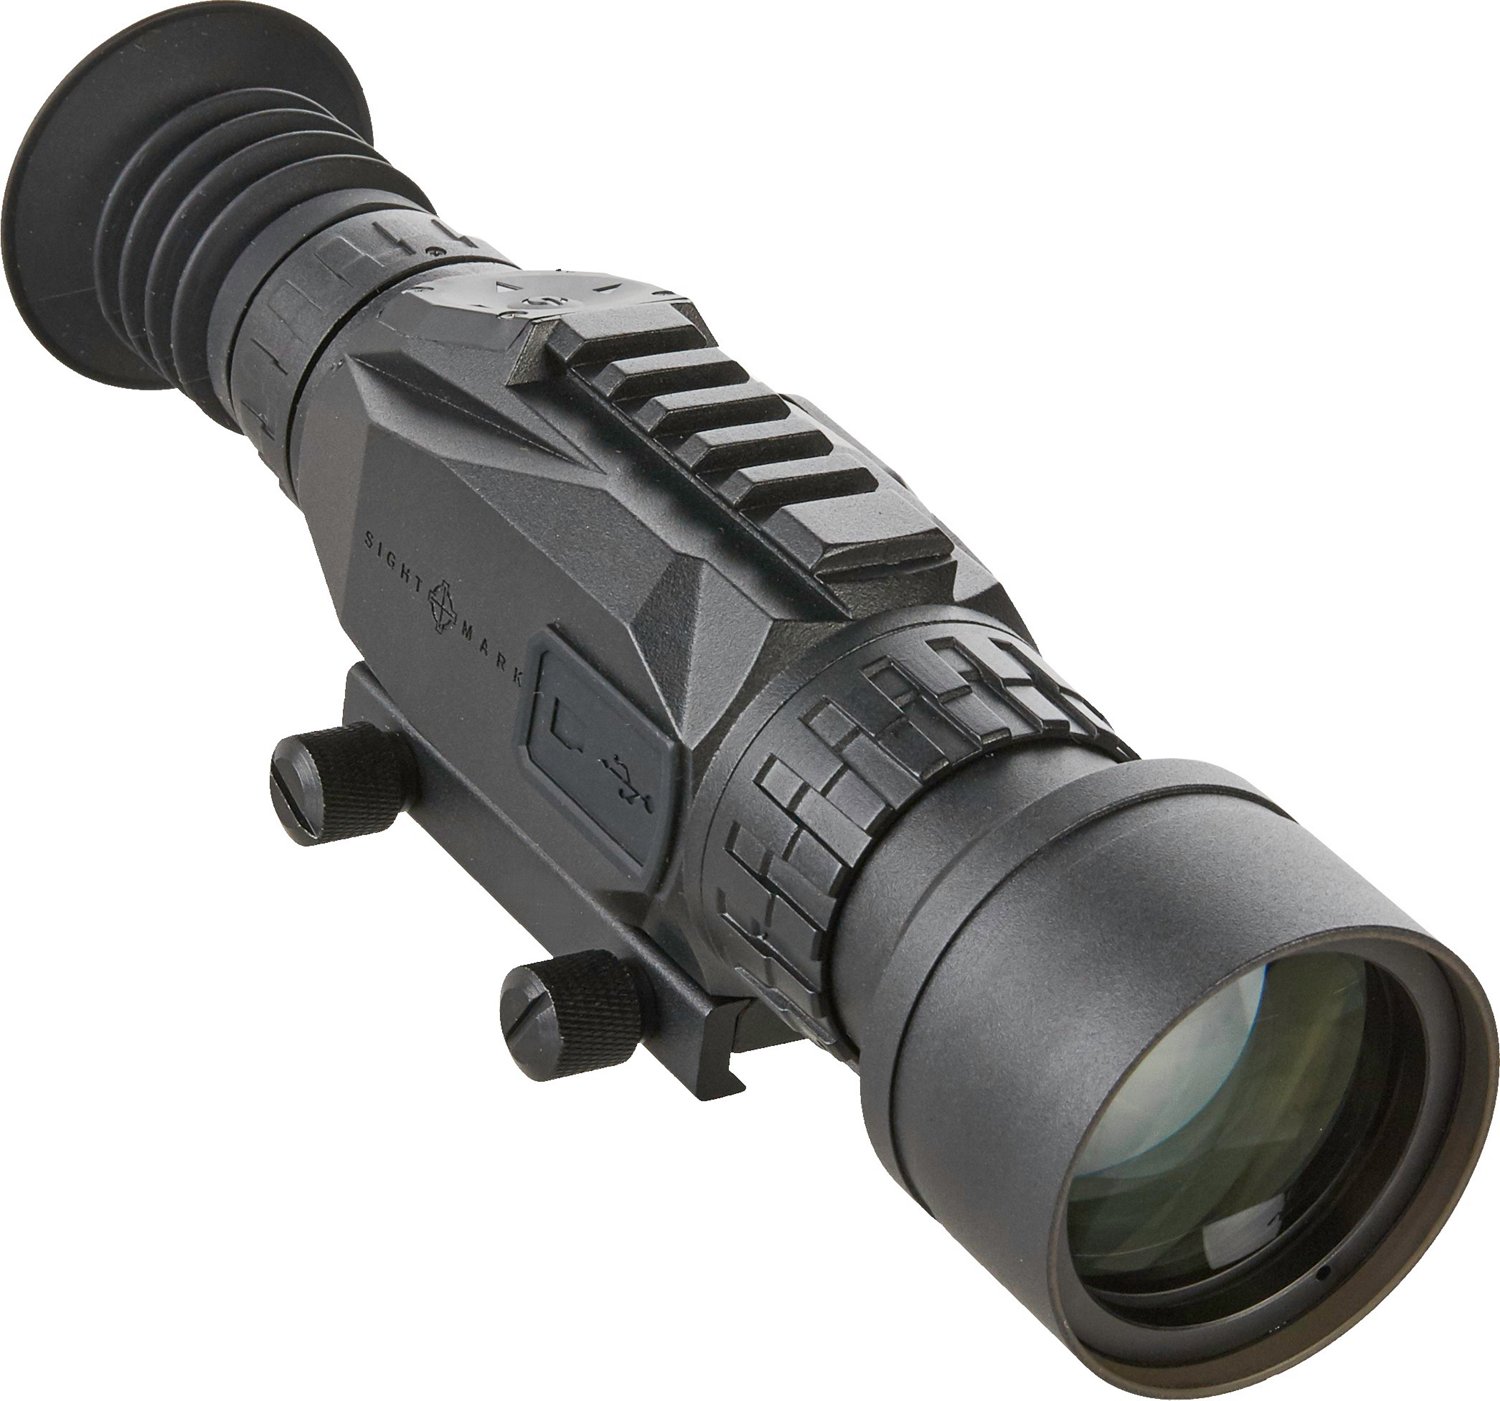 Sightmark Wraith HD Day/Night 4 - 32 x 50 Digital Riflescope with 850nm IR Illuminator                                           - view number 1 selected